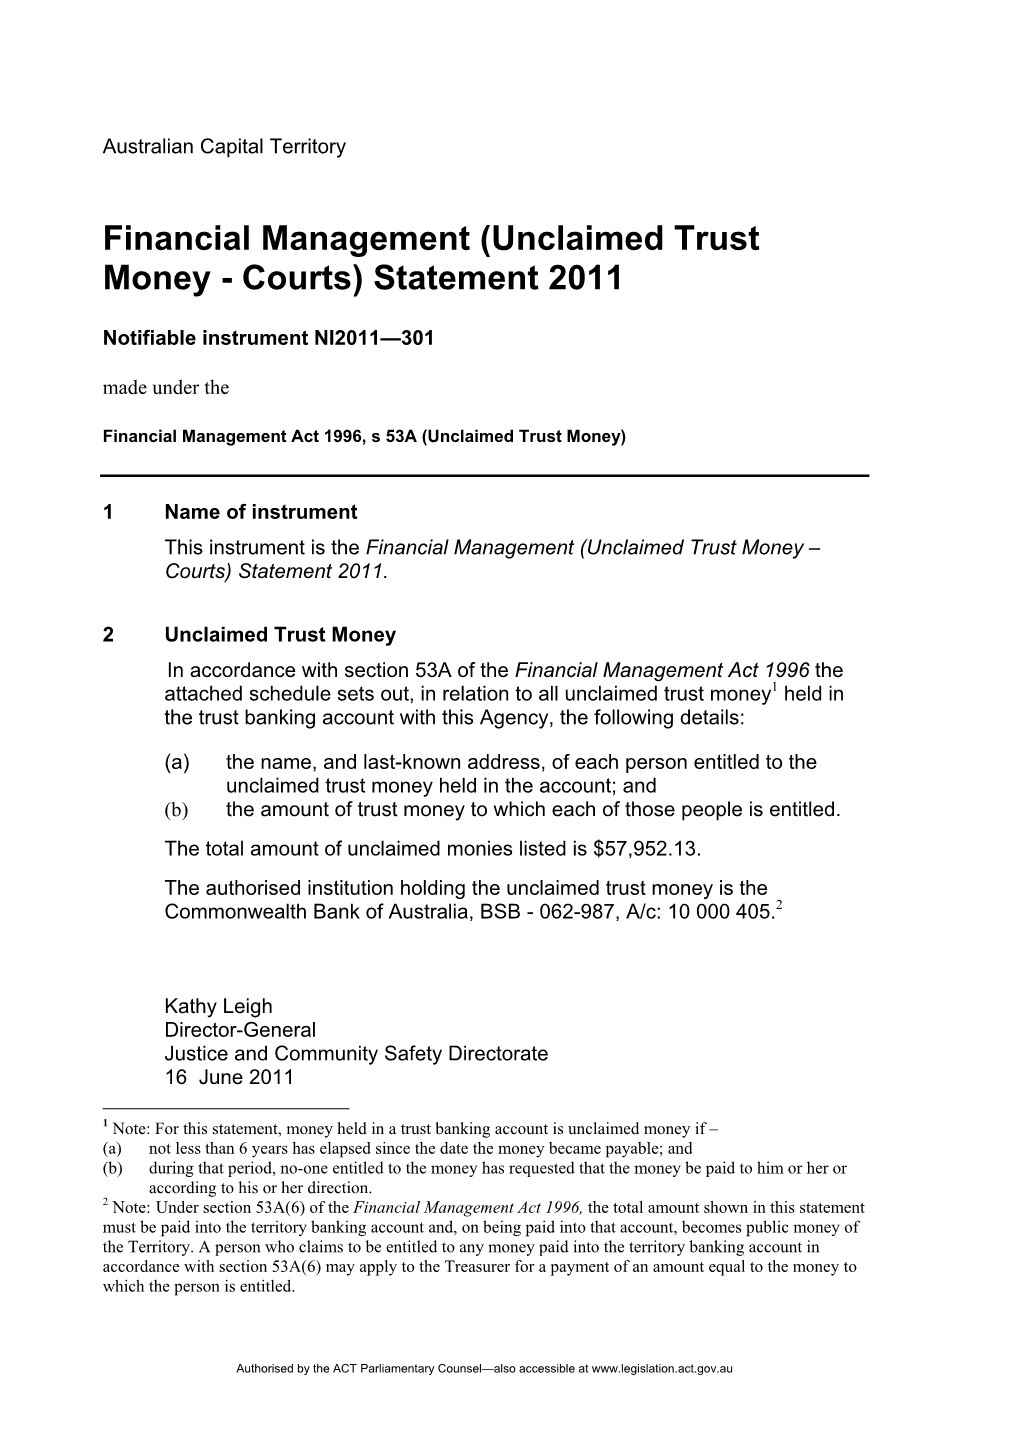 Financial Management (Unclaimed Trust Money - Courts) Statement 2011